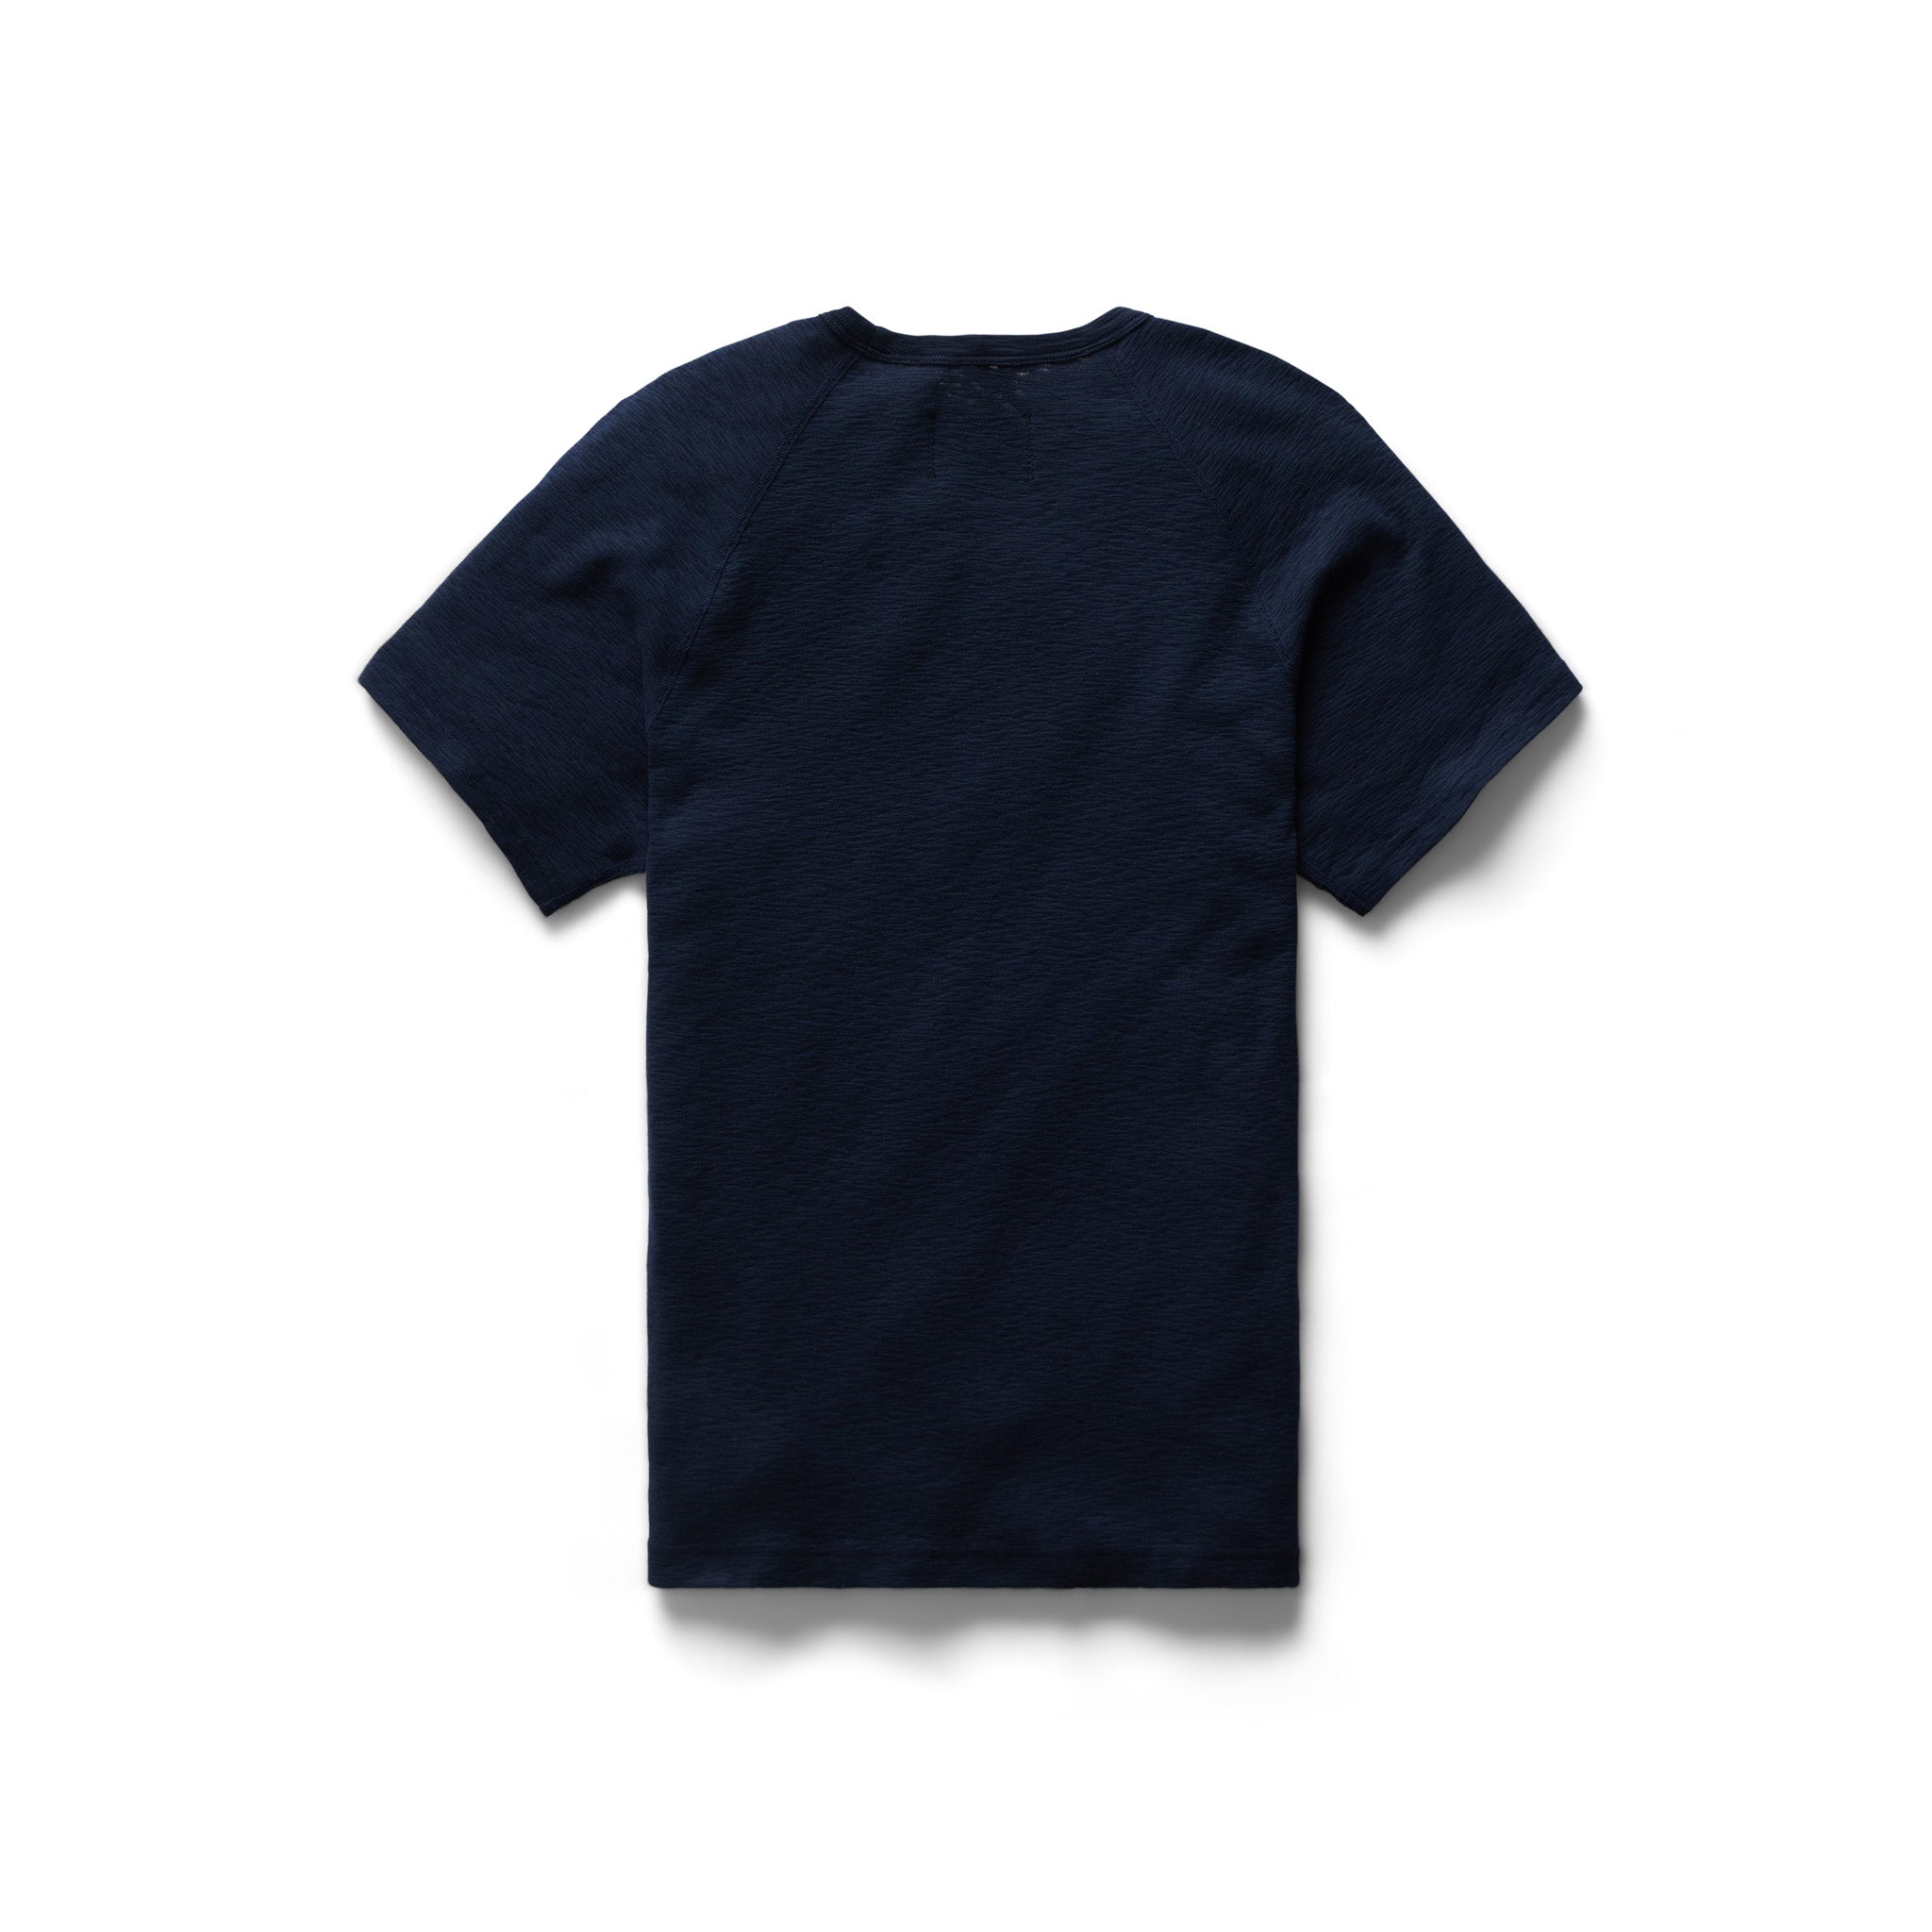 1x1 Slub T-shirt